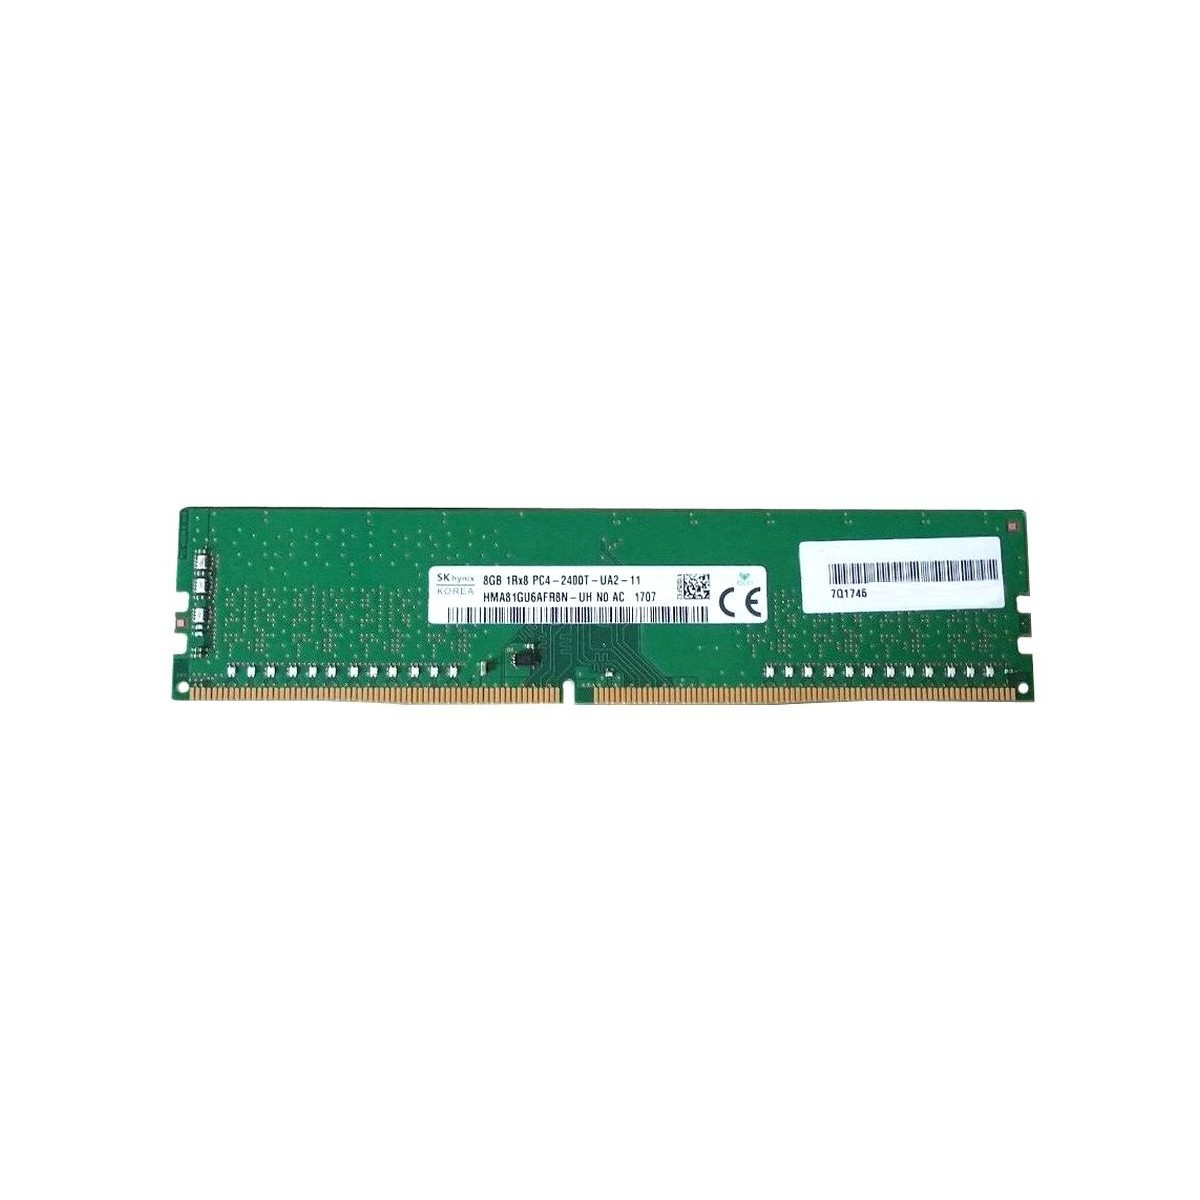 PAMIEC HYNIX 8GB 1Rx8 PC4-2400T NON-ECC UDIMM